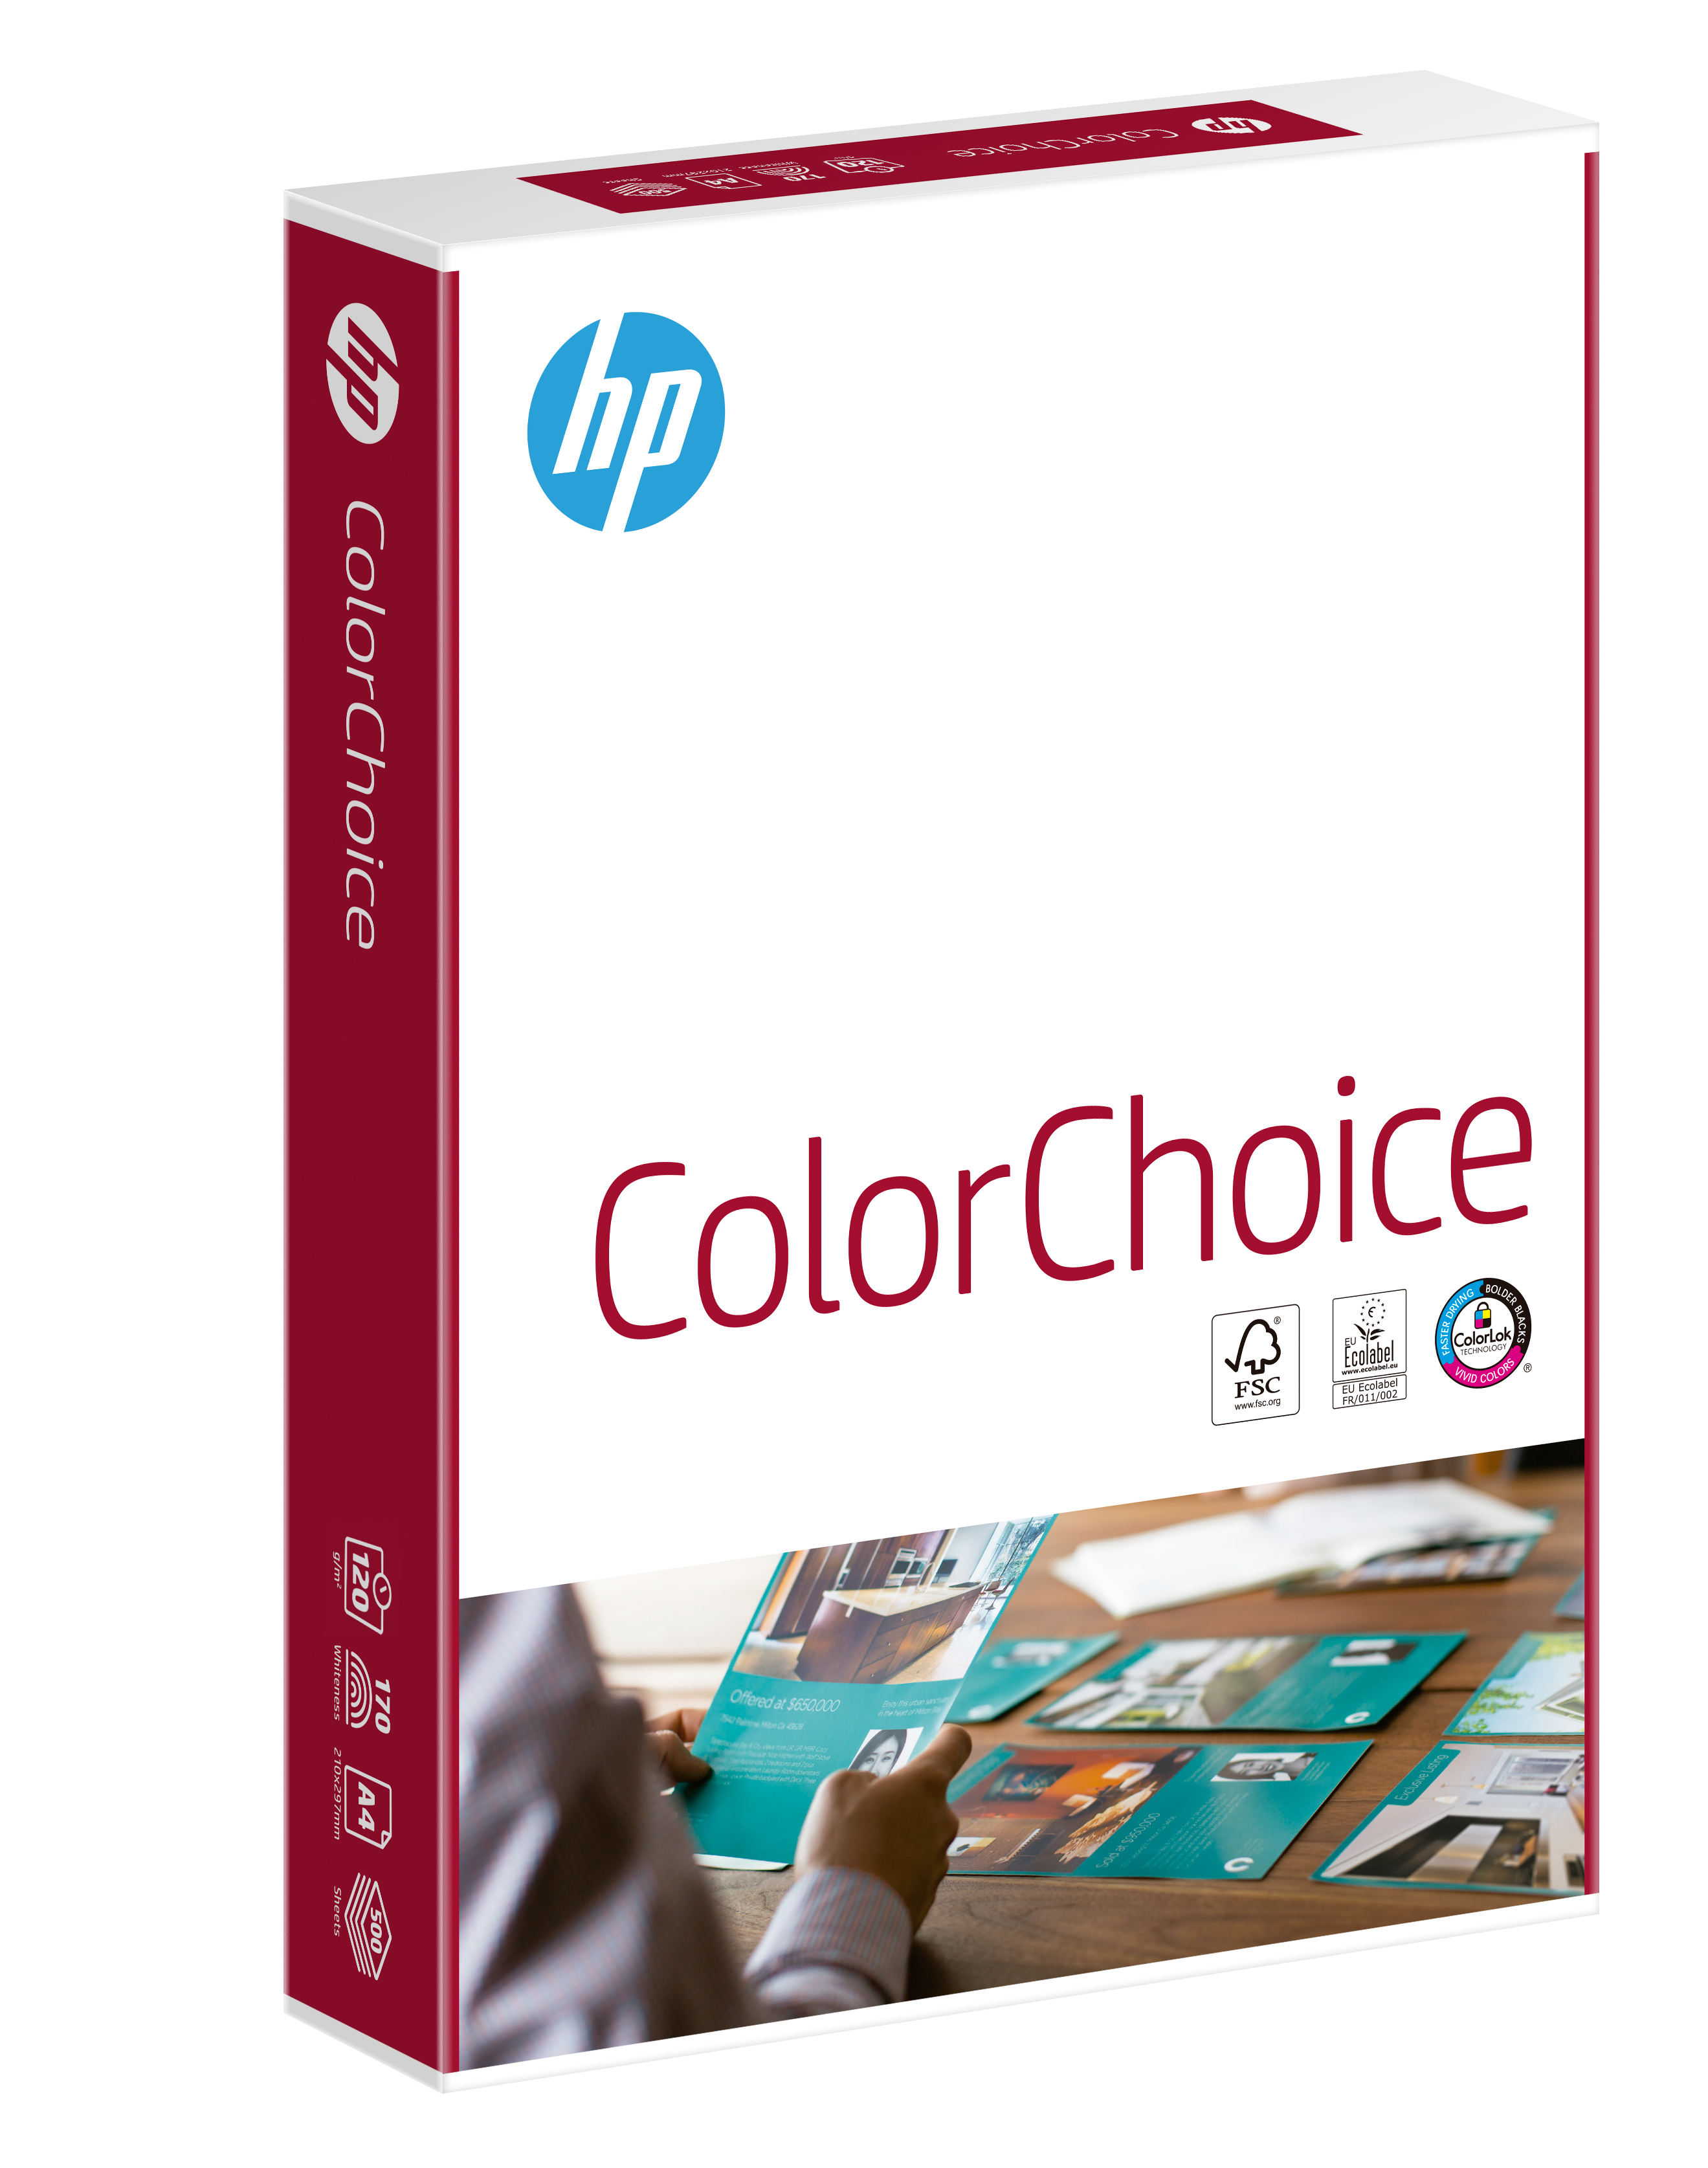 HP Color Choice FSC Paper A4 120gsm White (Ream 500)